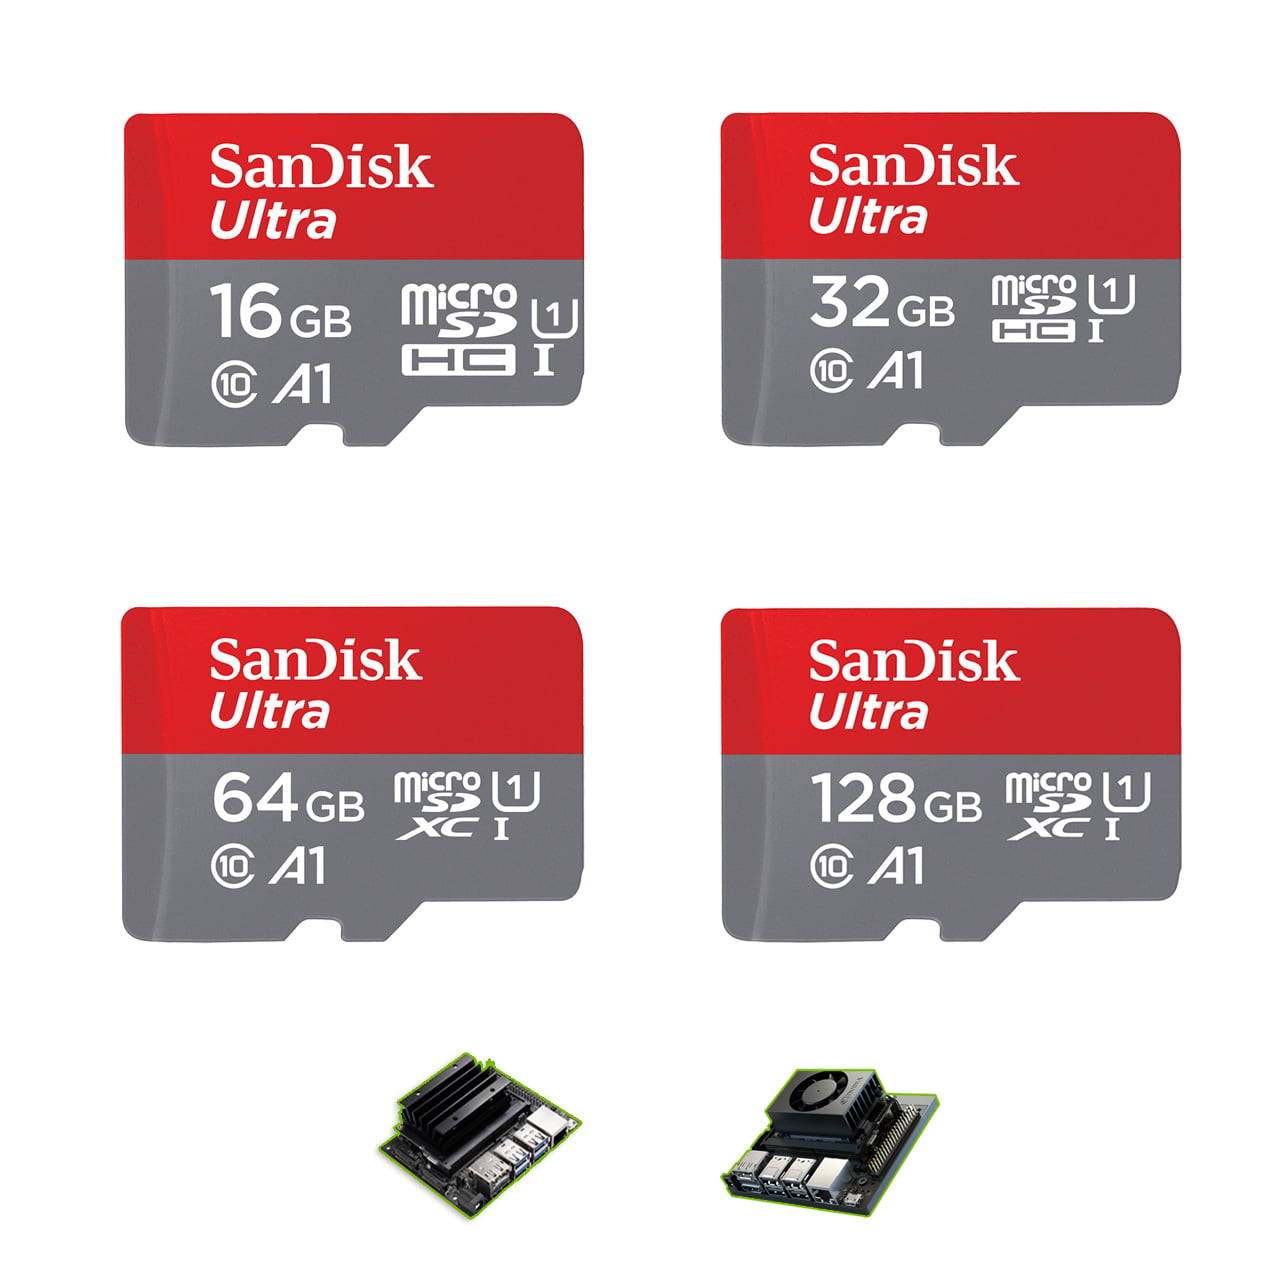 https://piveral.com/wp-content/uploads/2020/12/SD-Cards-for-Nvidia-Jetson-Nano-NX-dev-kits.jpg